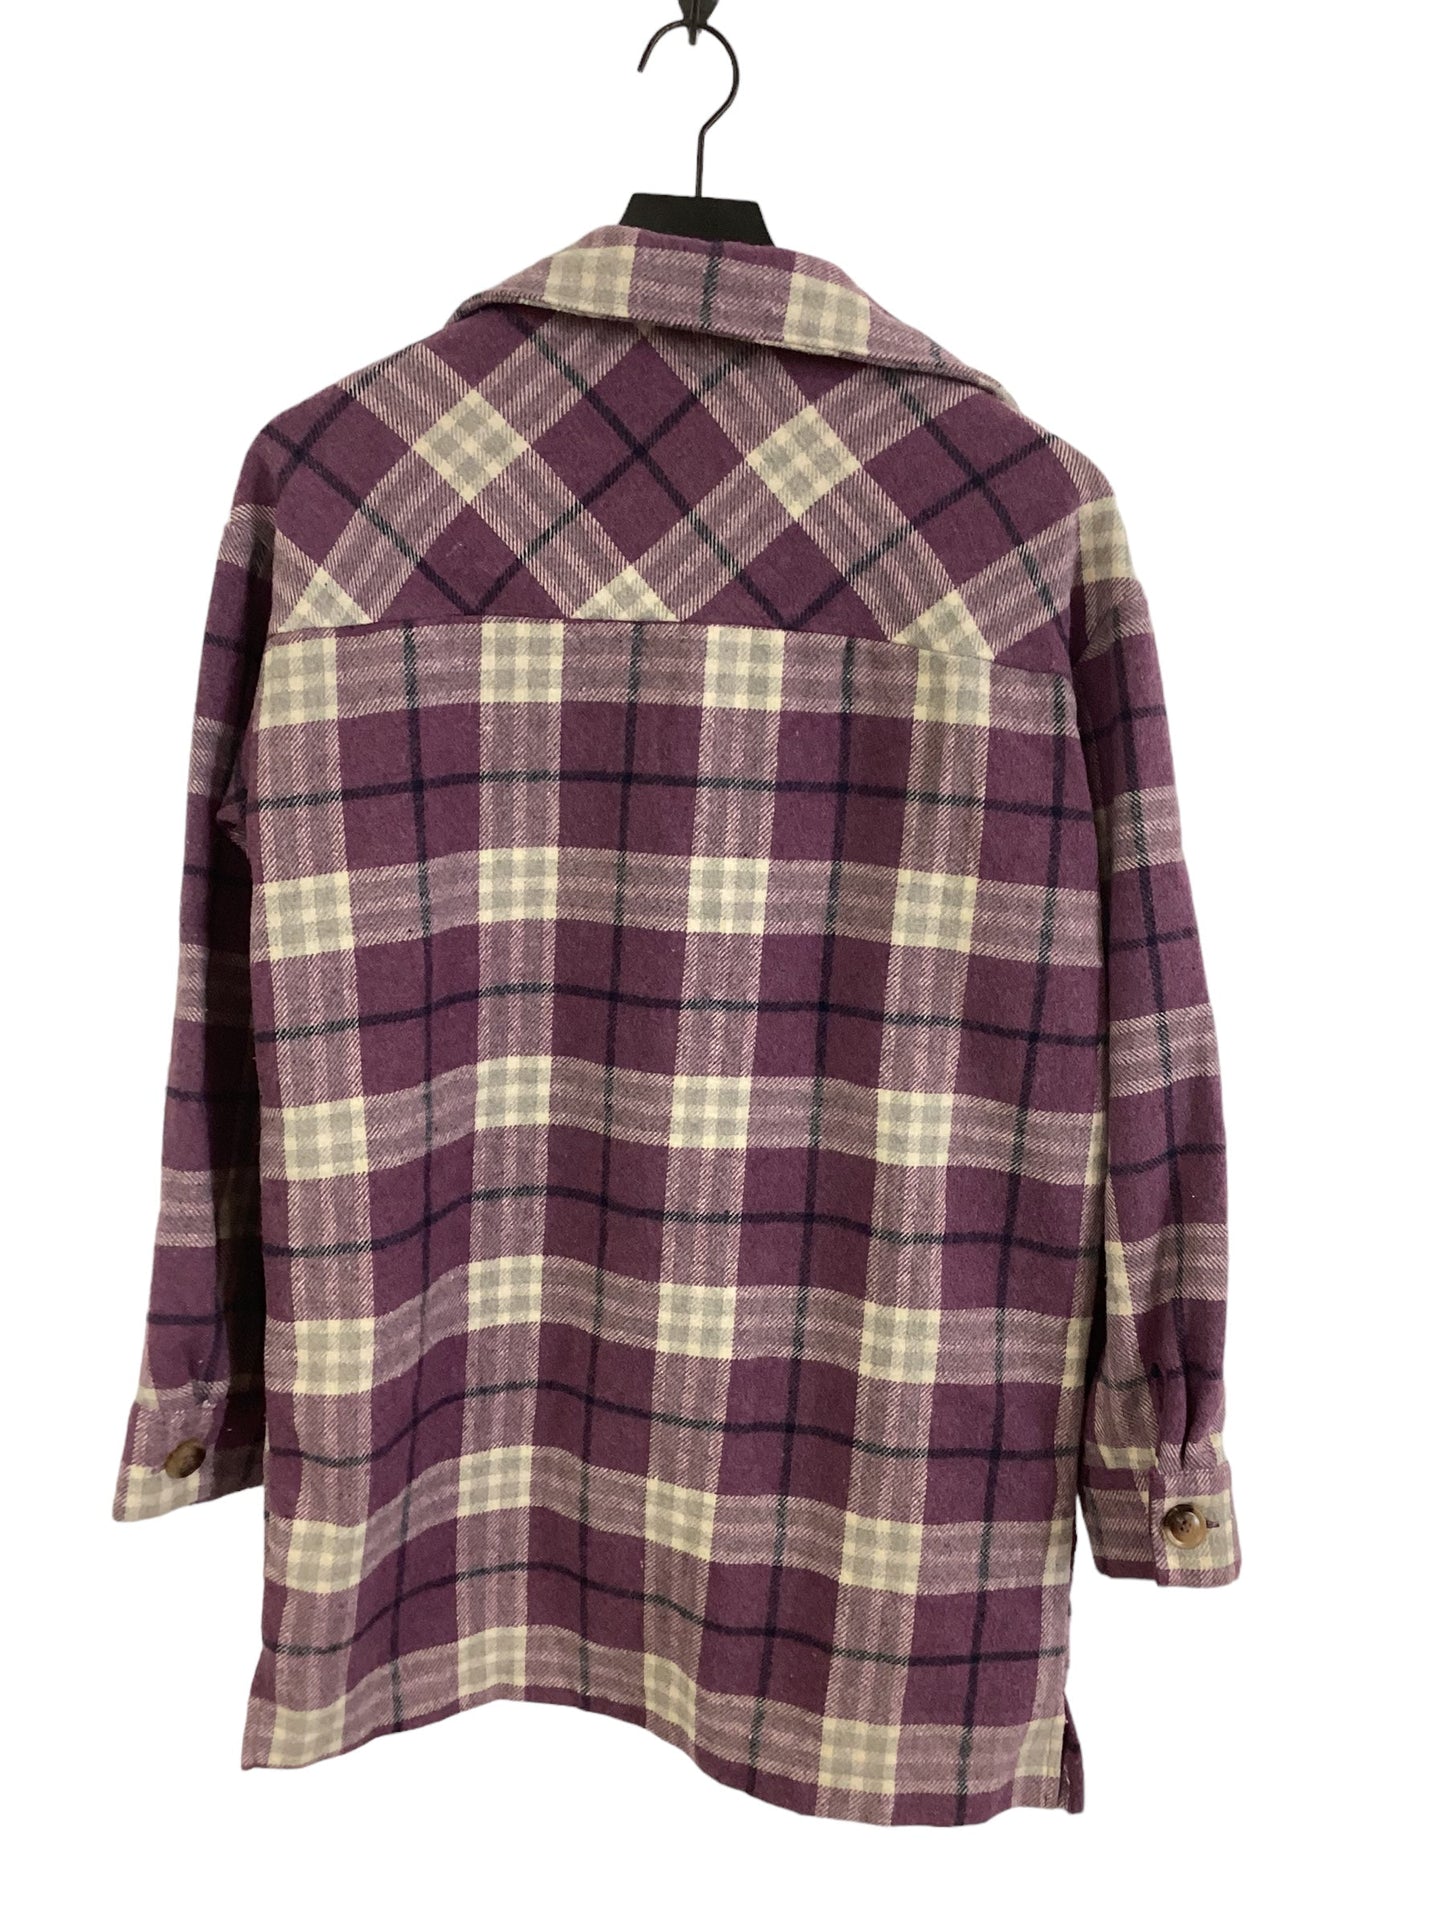 Jacket Shirt By Hem & Thread  Size: S